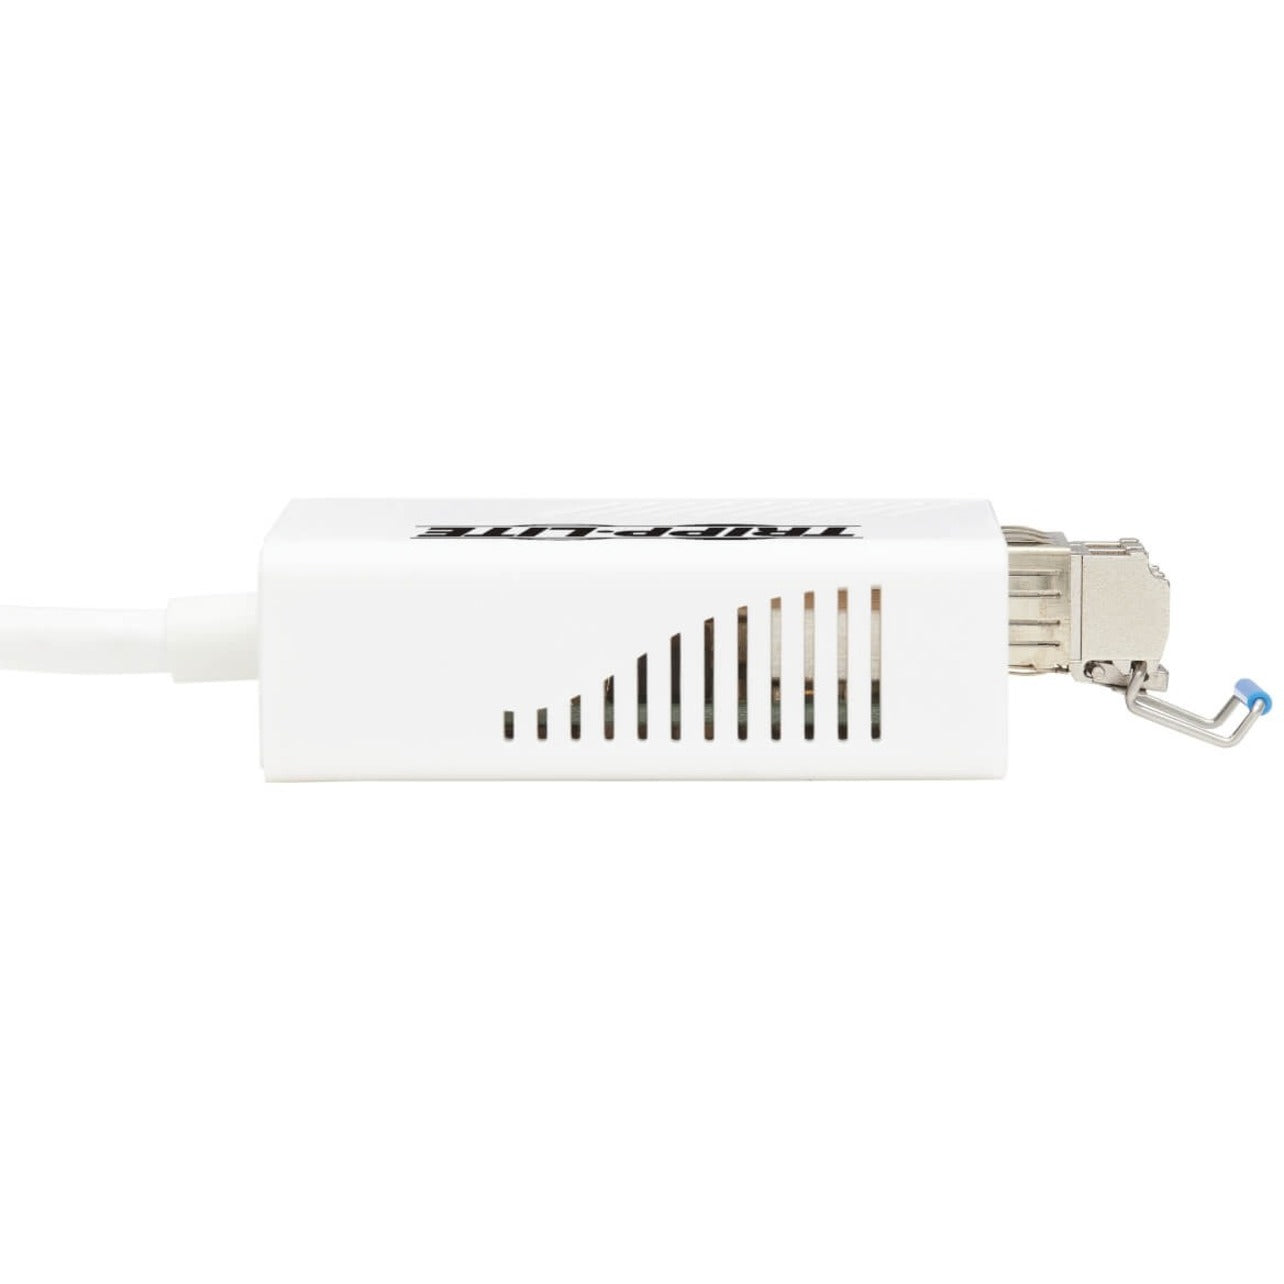 Tripp Lite U236-SMF-LC USB 2.0 ETHERNET NIC Adapter, LC SMF, 100Base-FX